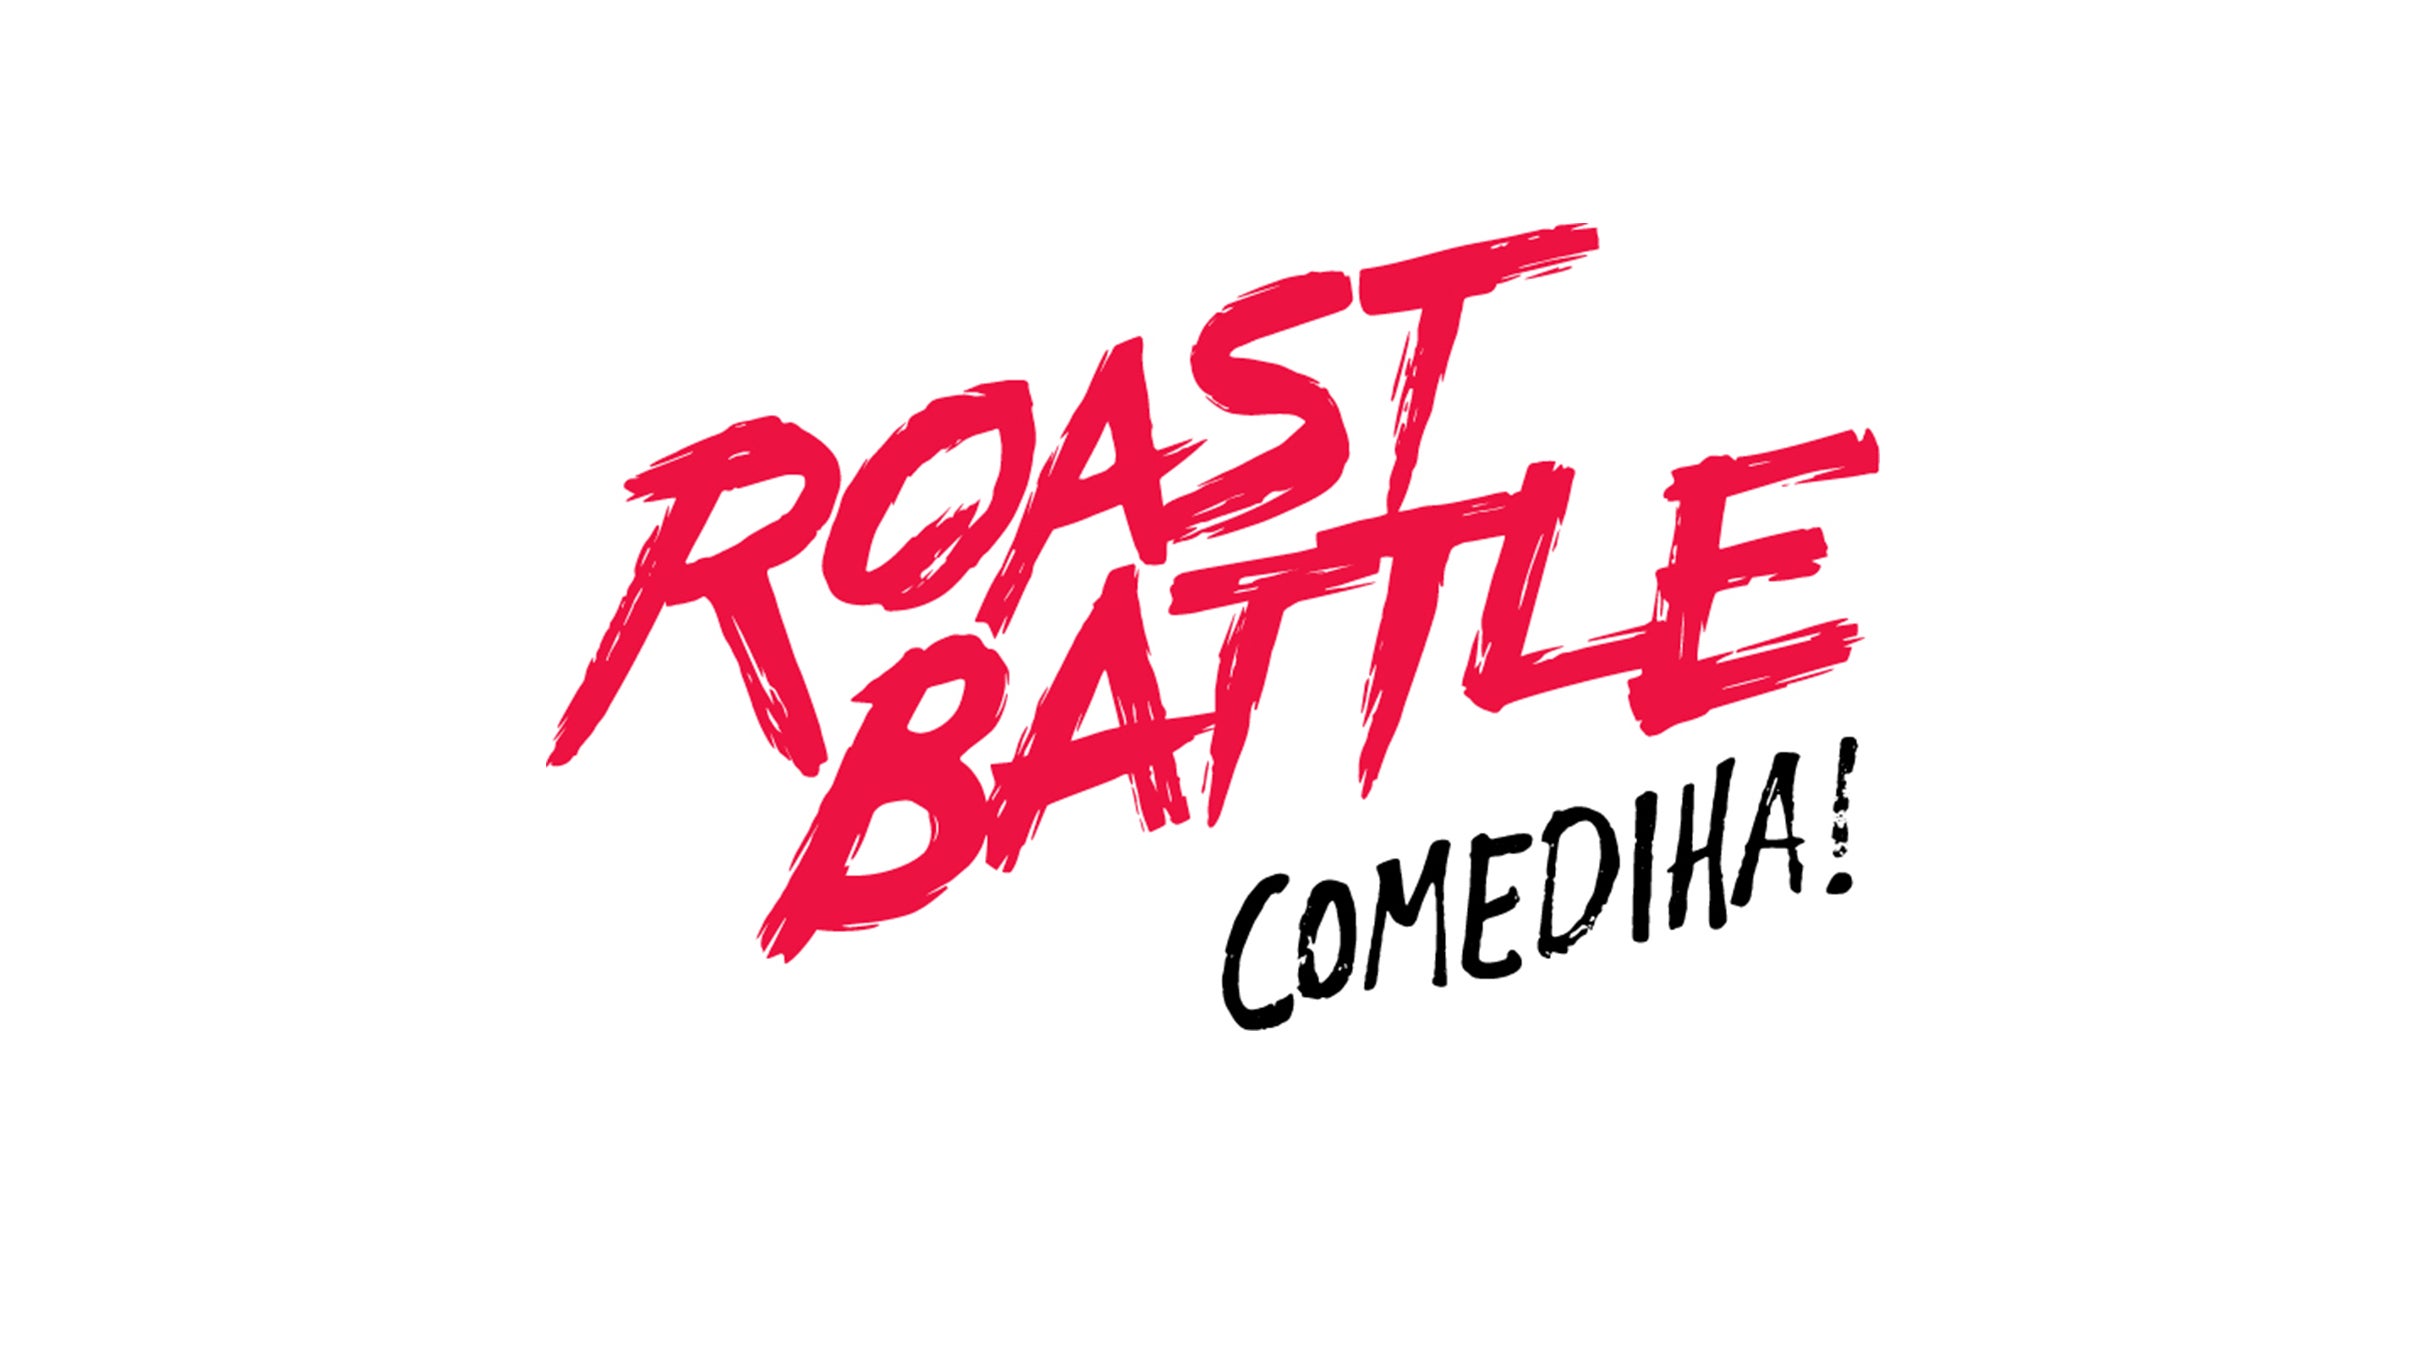 Netflix Is A Joke Presents: Roast Battle at The Comedy Store